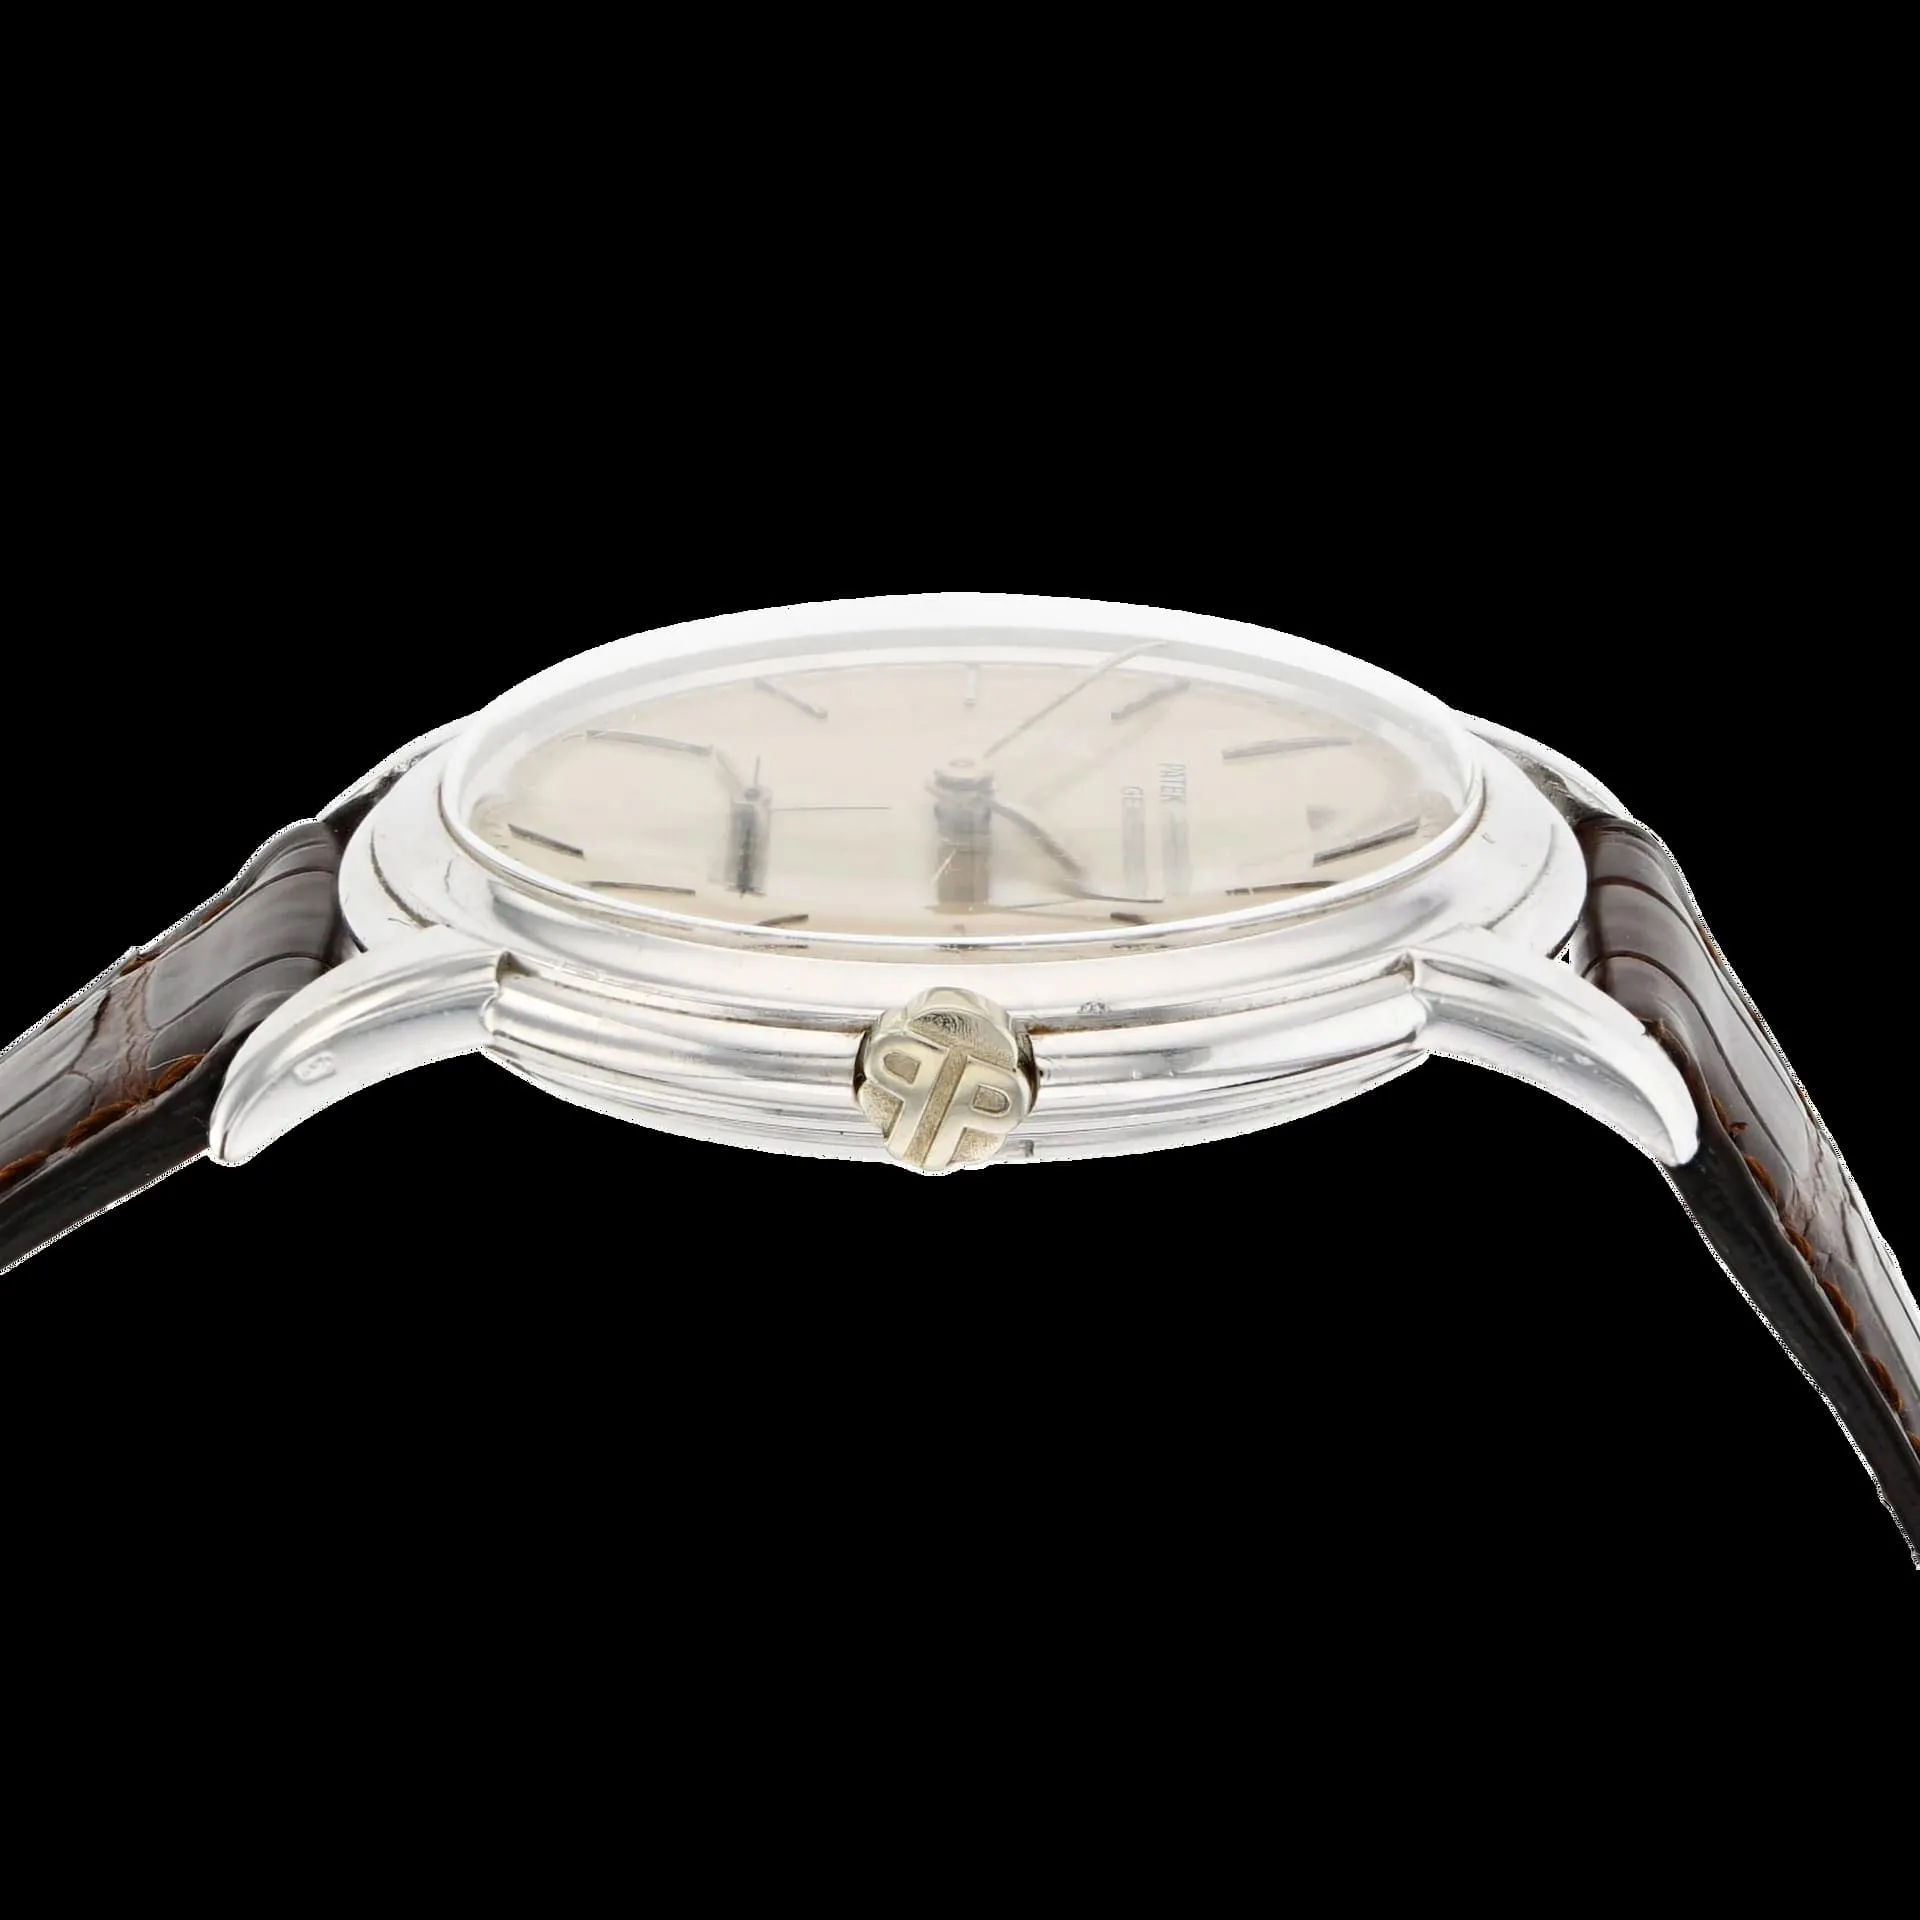 Patek Philippe Calatrava 3433 35.9mm White gold Silver 5